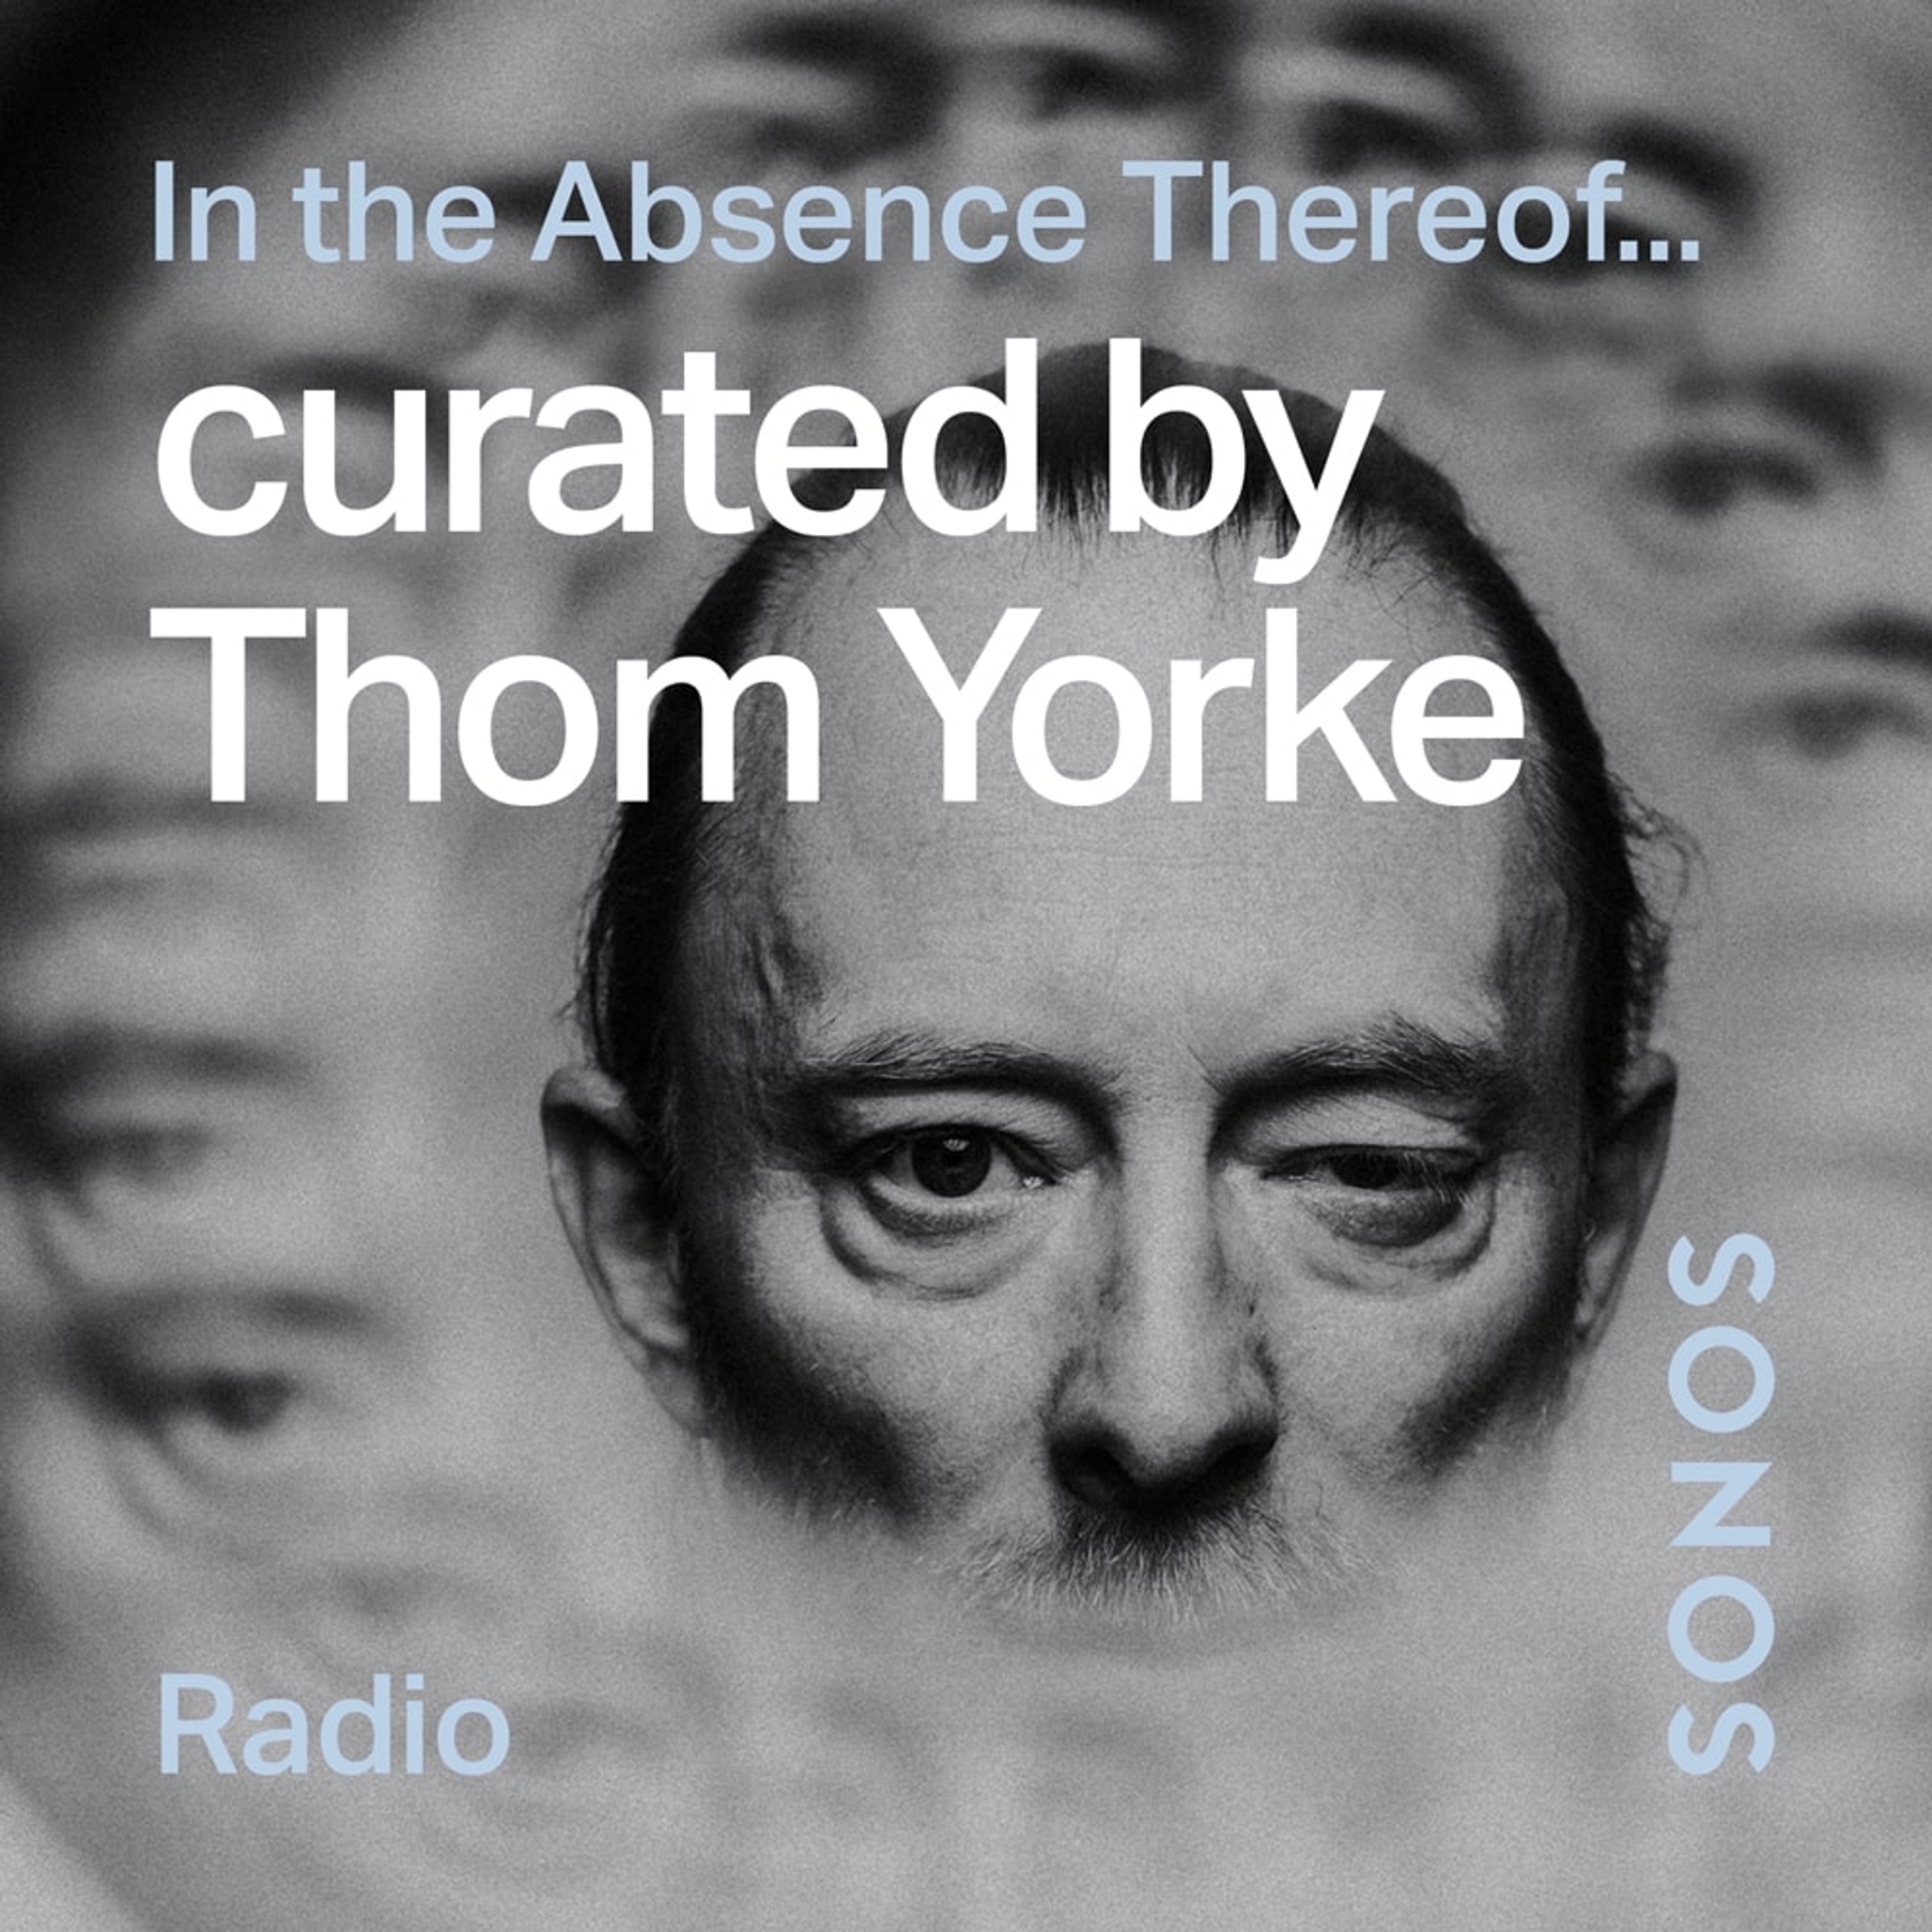 Thom Yorke radio station cover